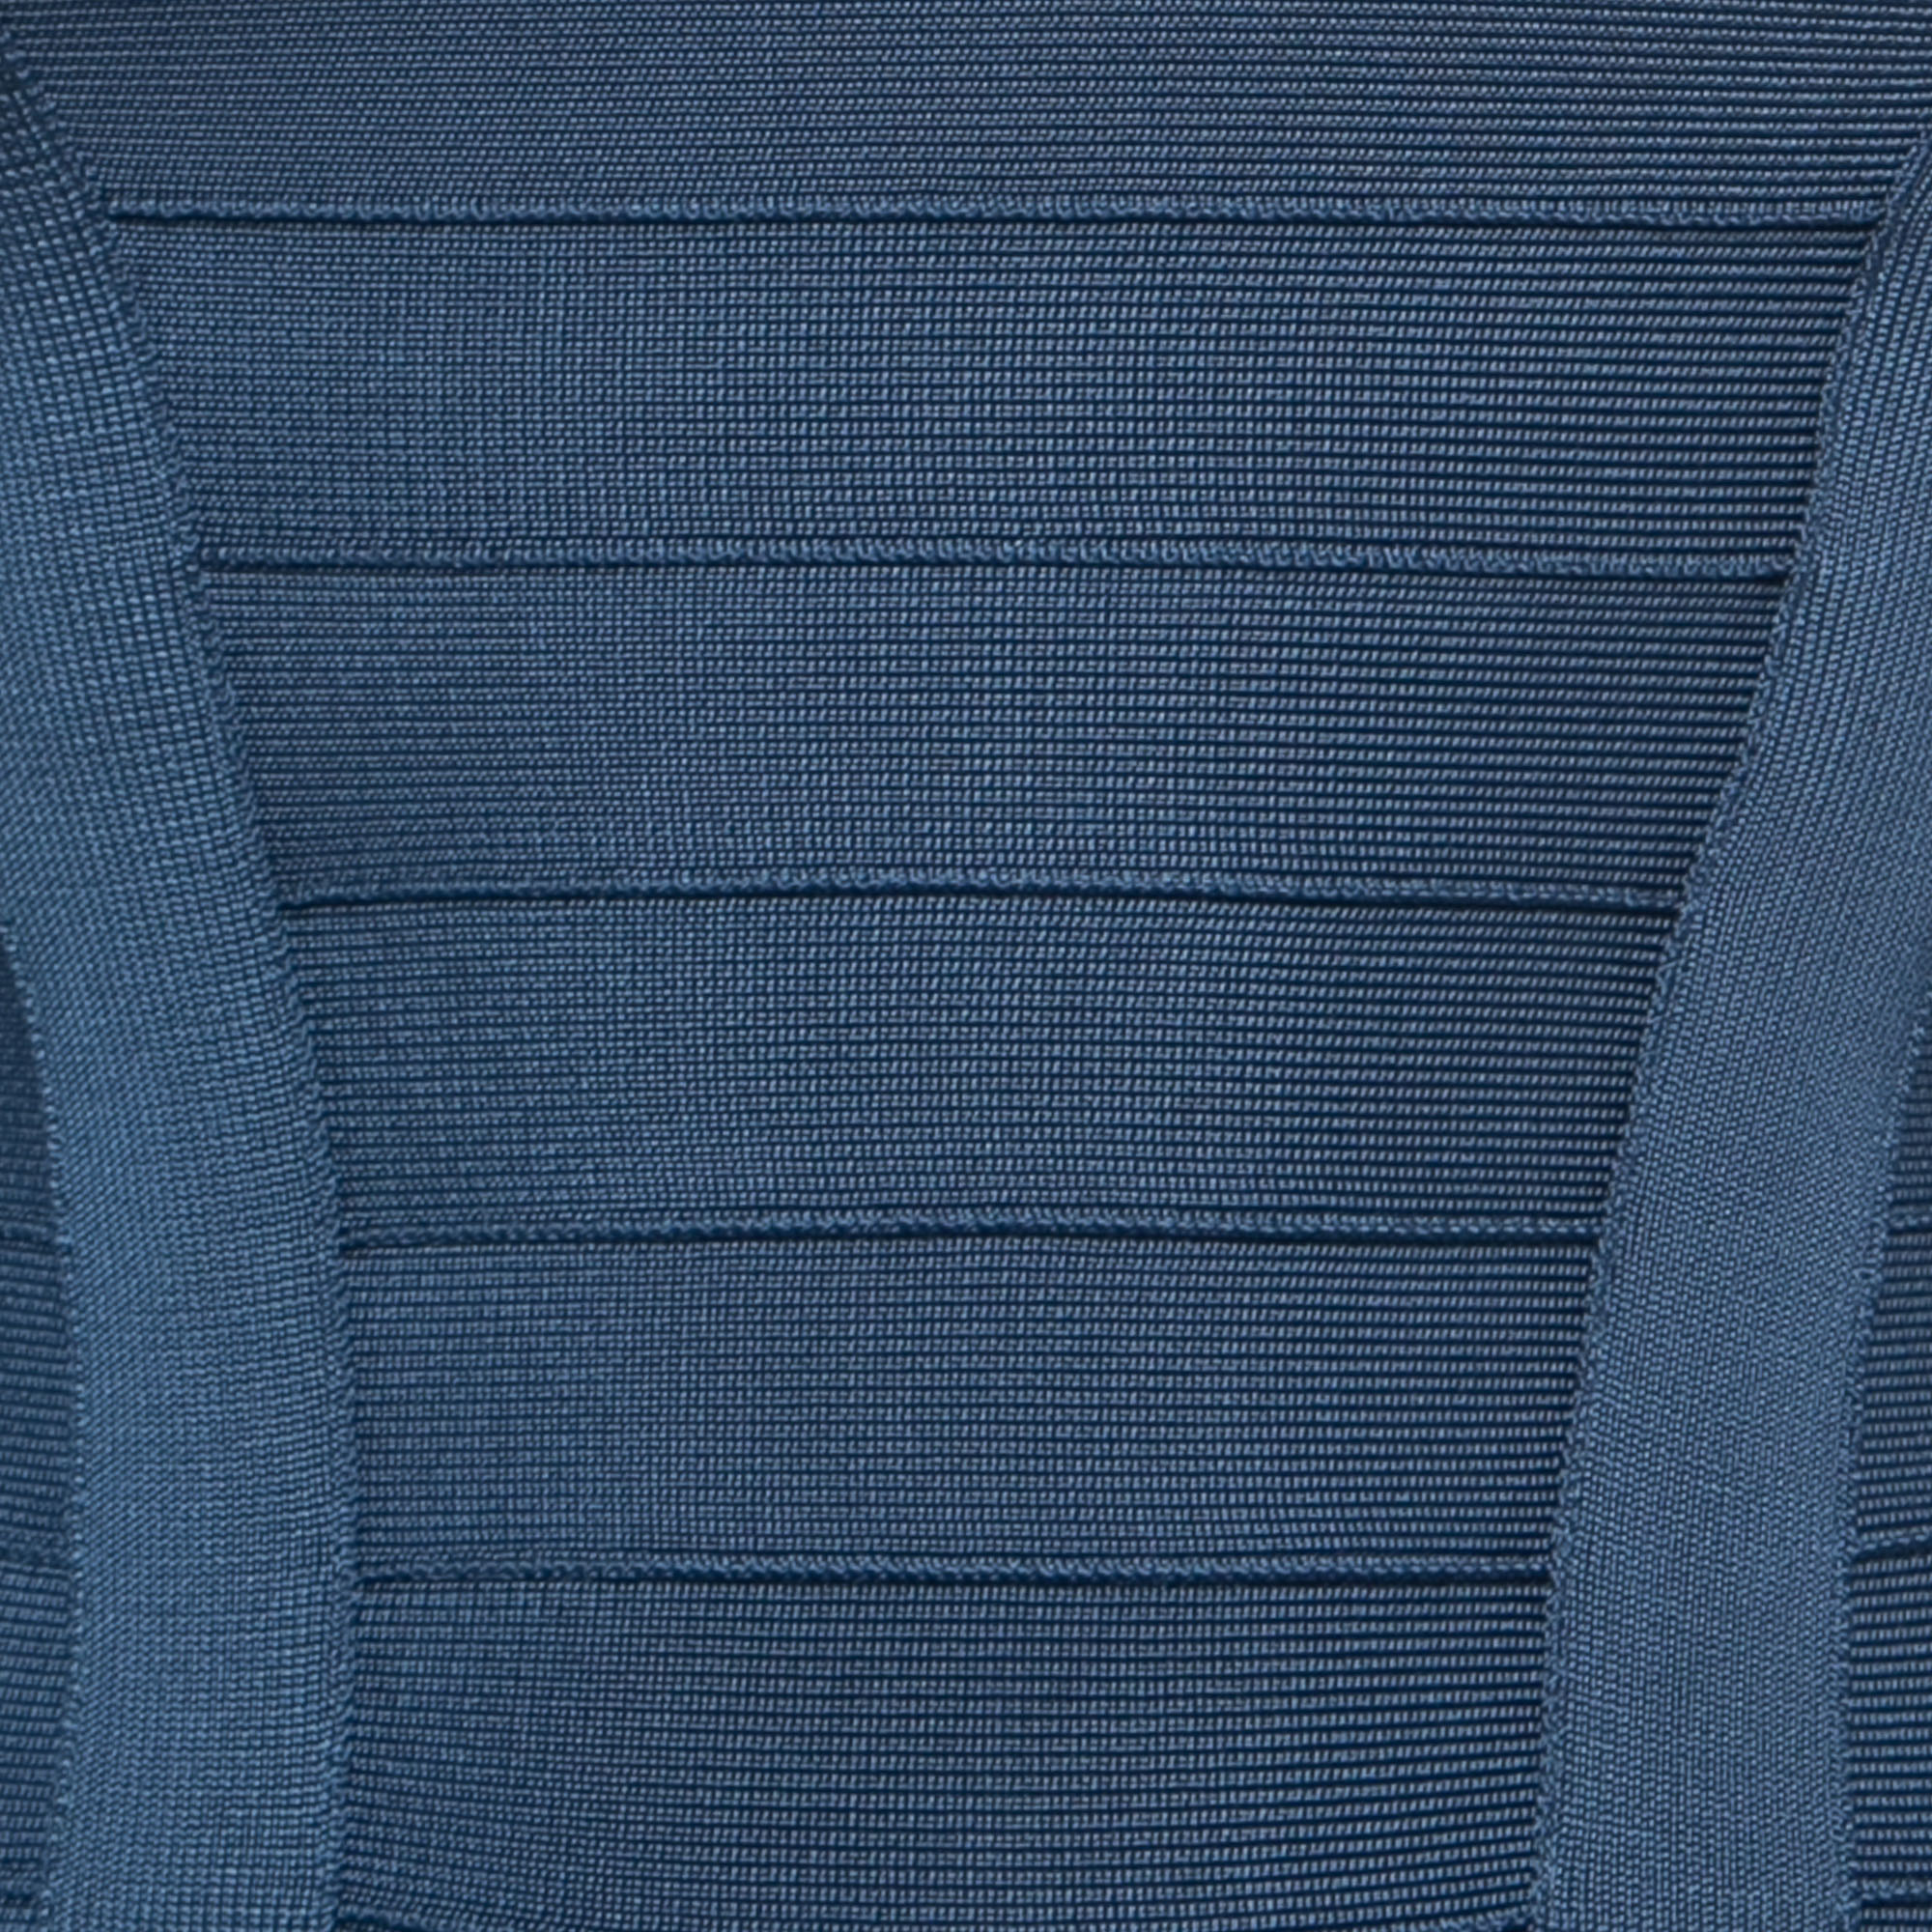 Herve Leger Blue Bandage Knit Cap Sleeve Bodycon Dress XS